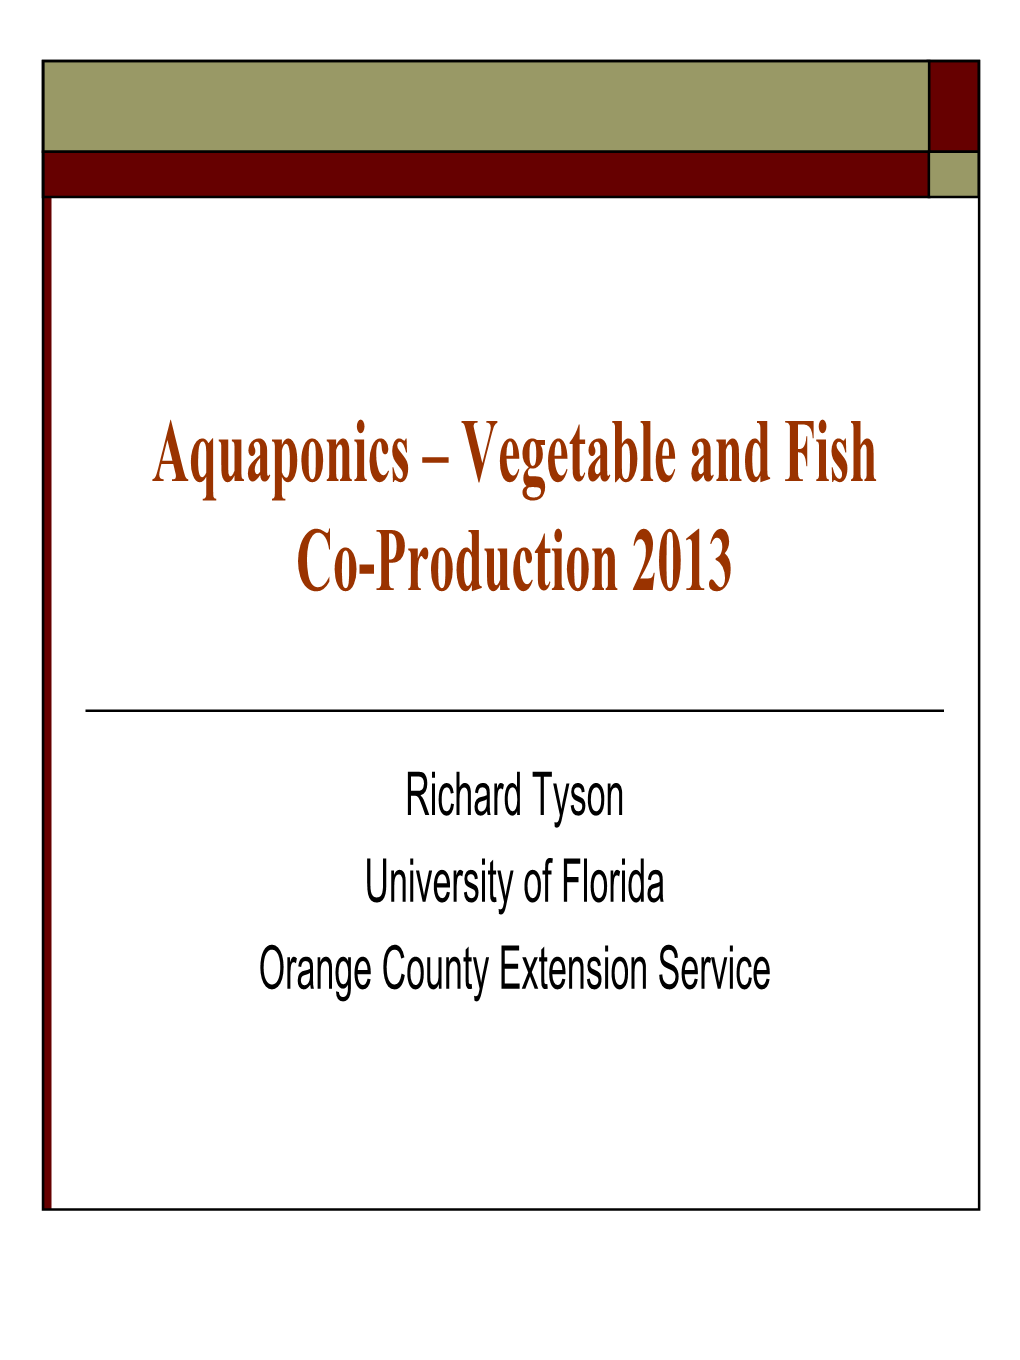 Aquaponics – Vegetable and Fish Co-Production 2013